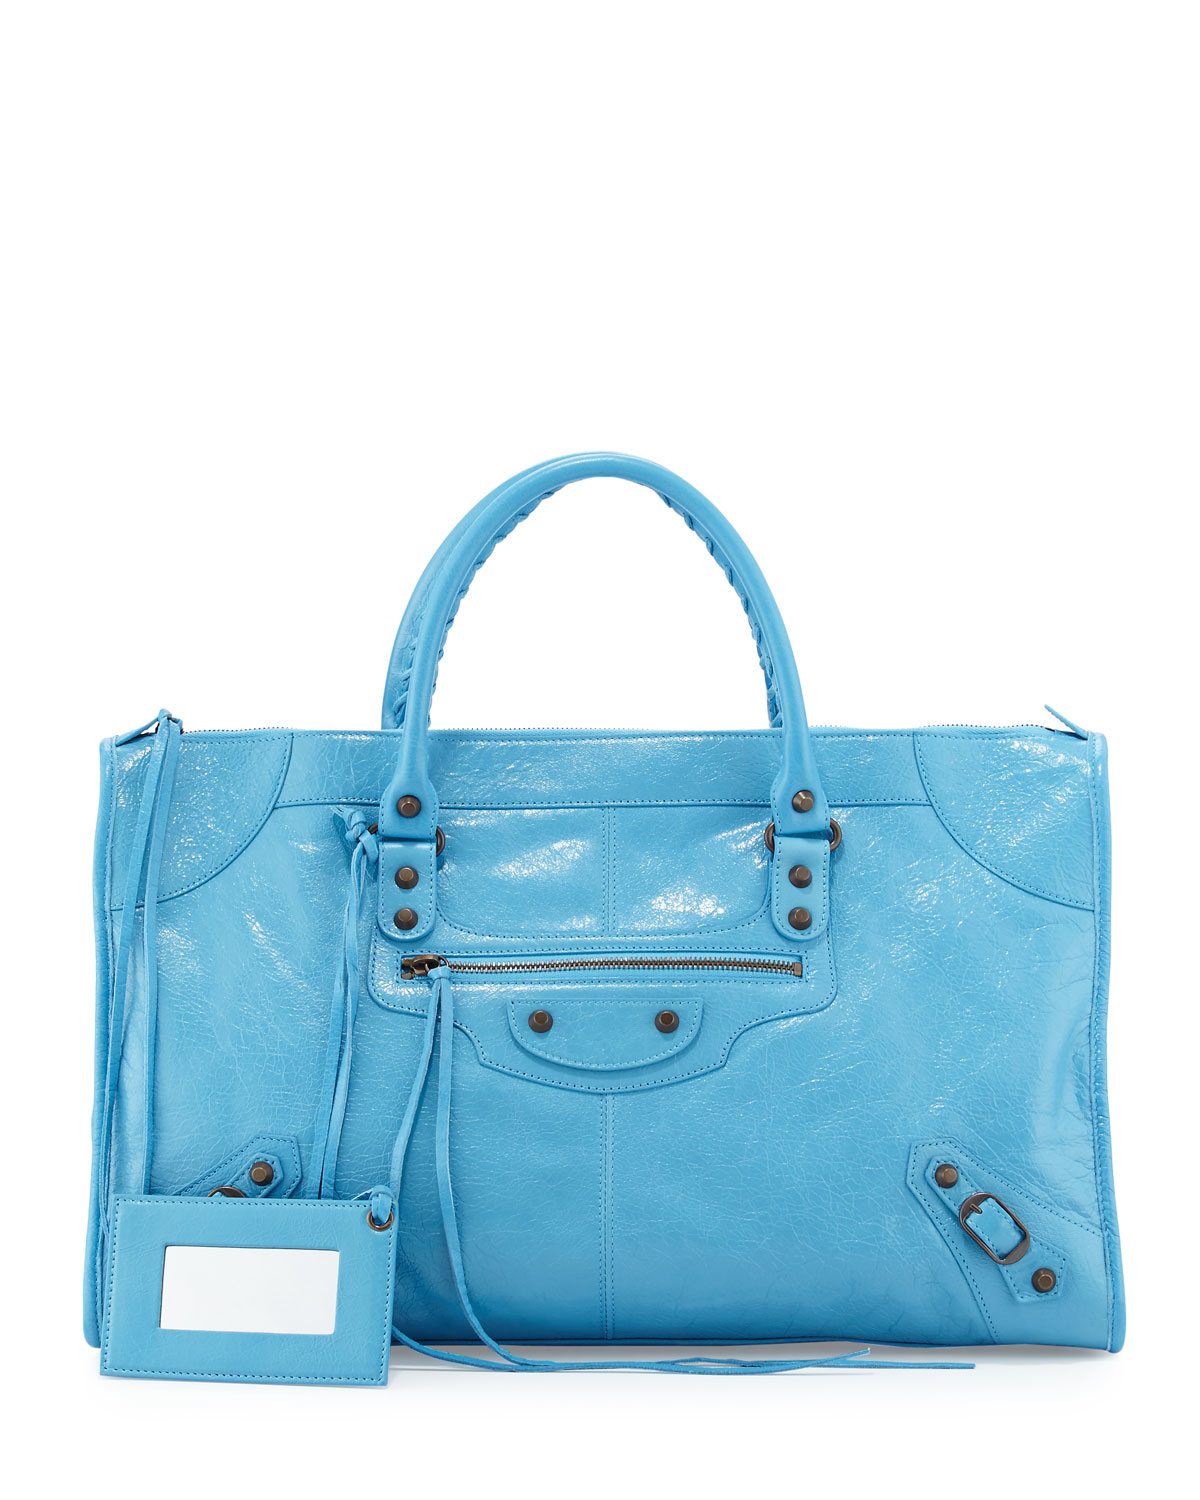 Balenciaga Classic Work Lambskin Tote Bag in Blue | Lyst